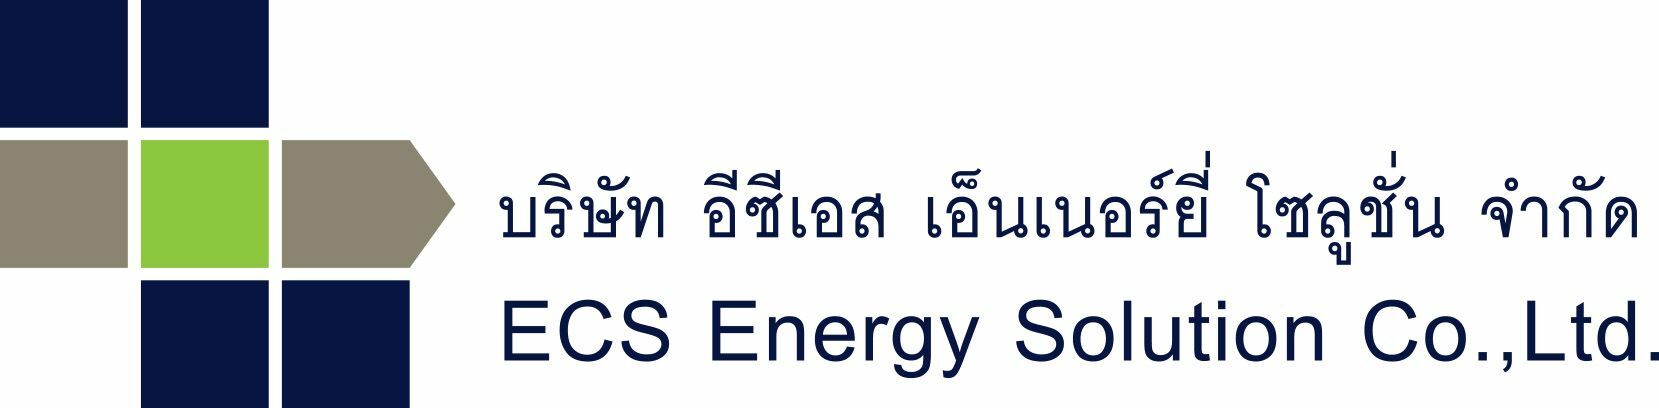 ECS Energy Solution